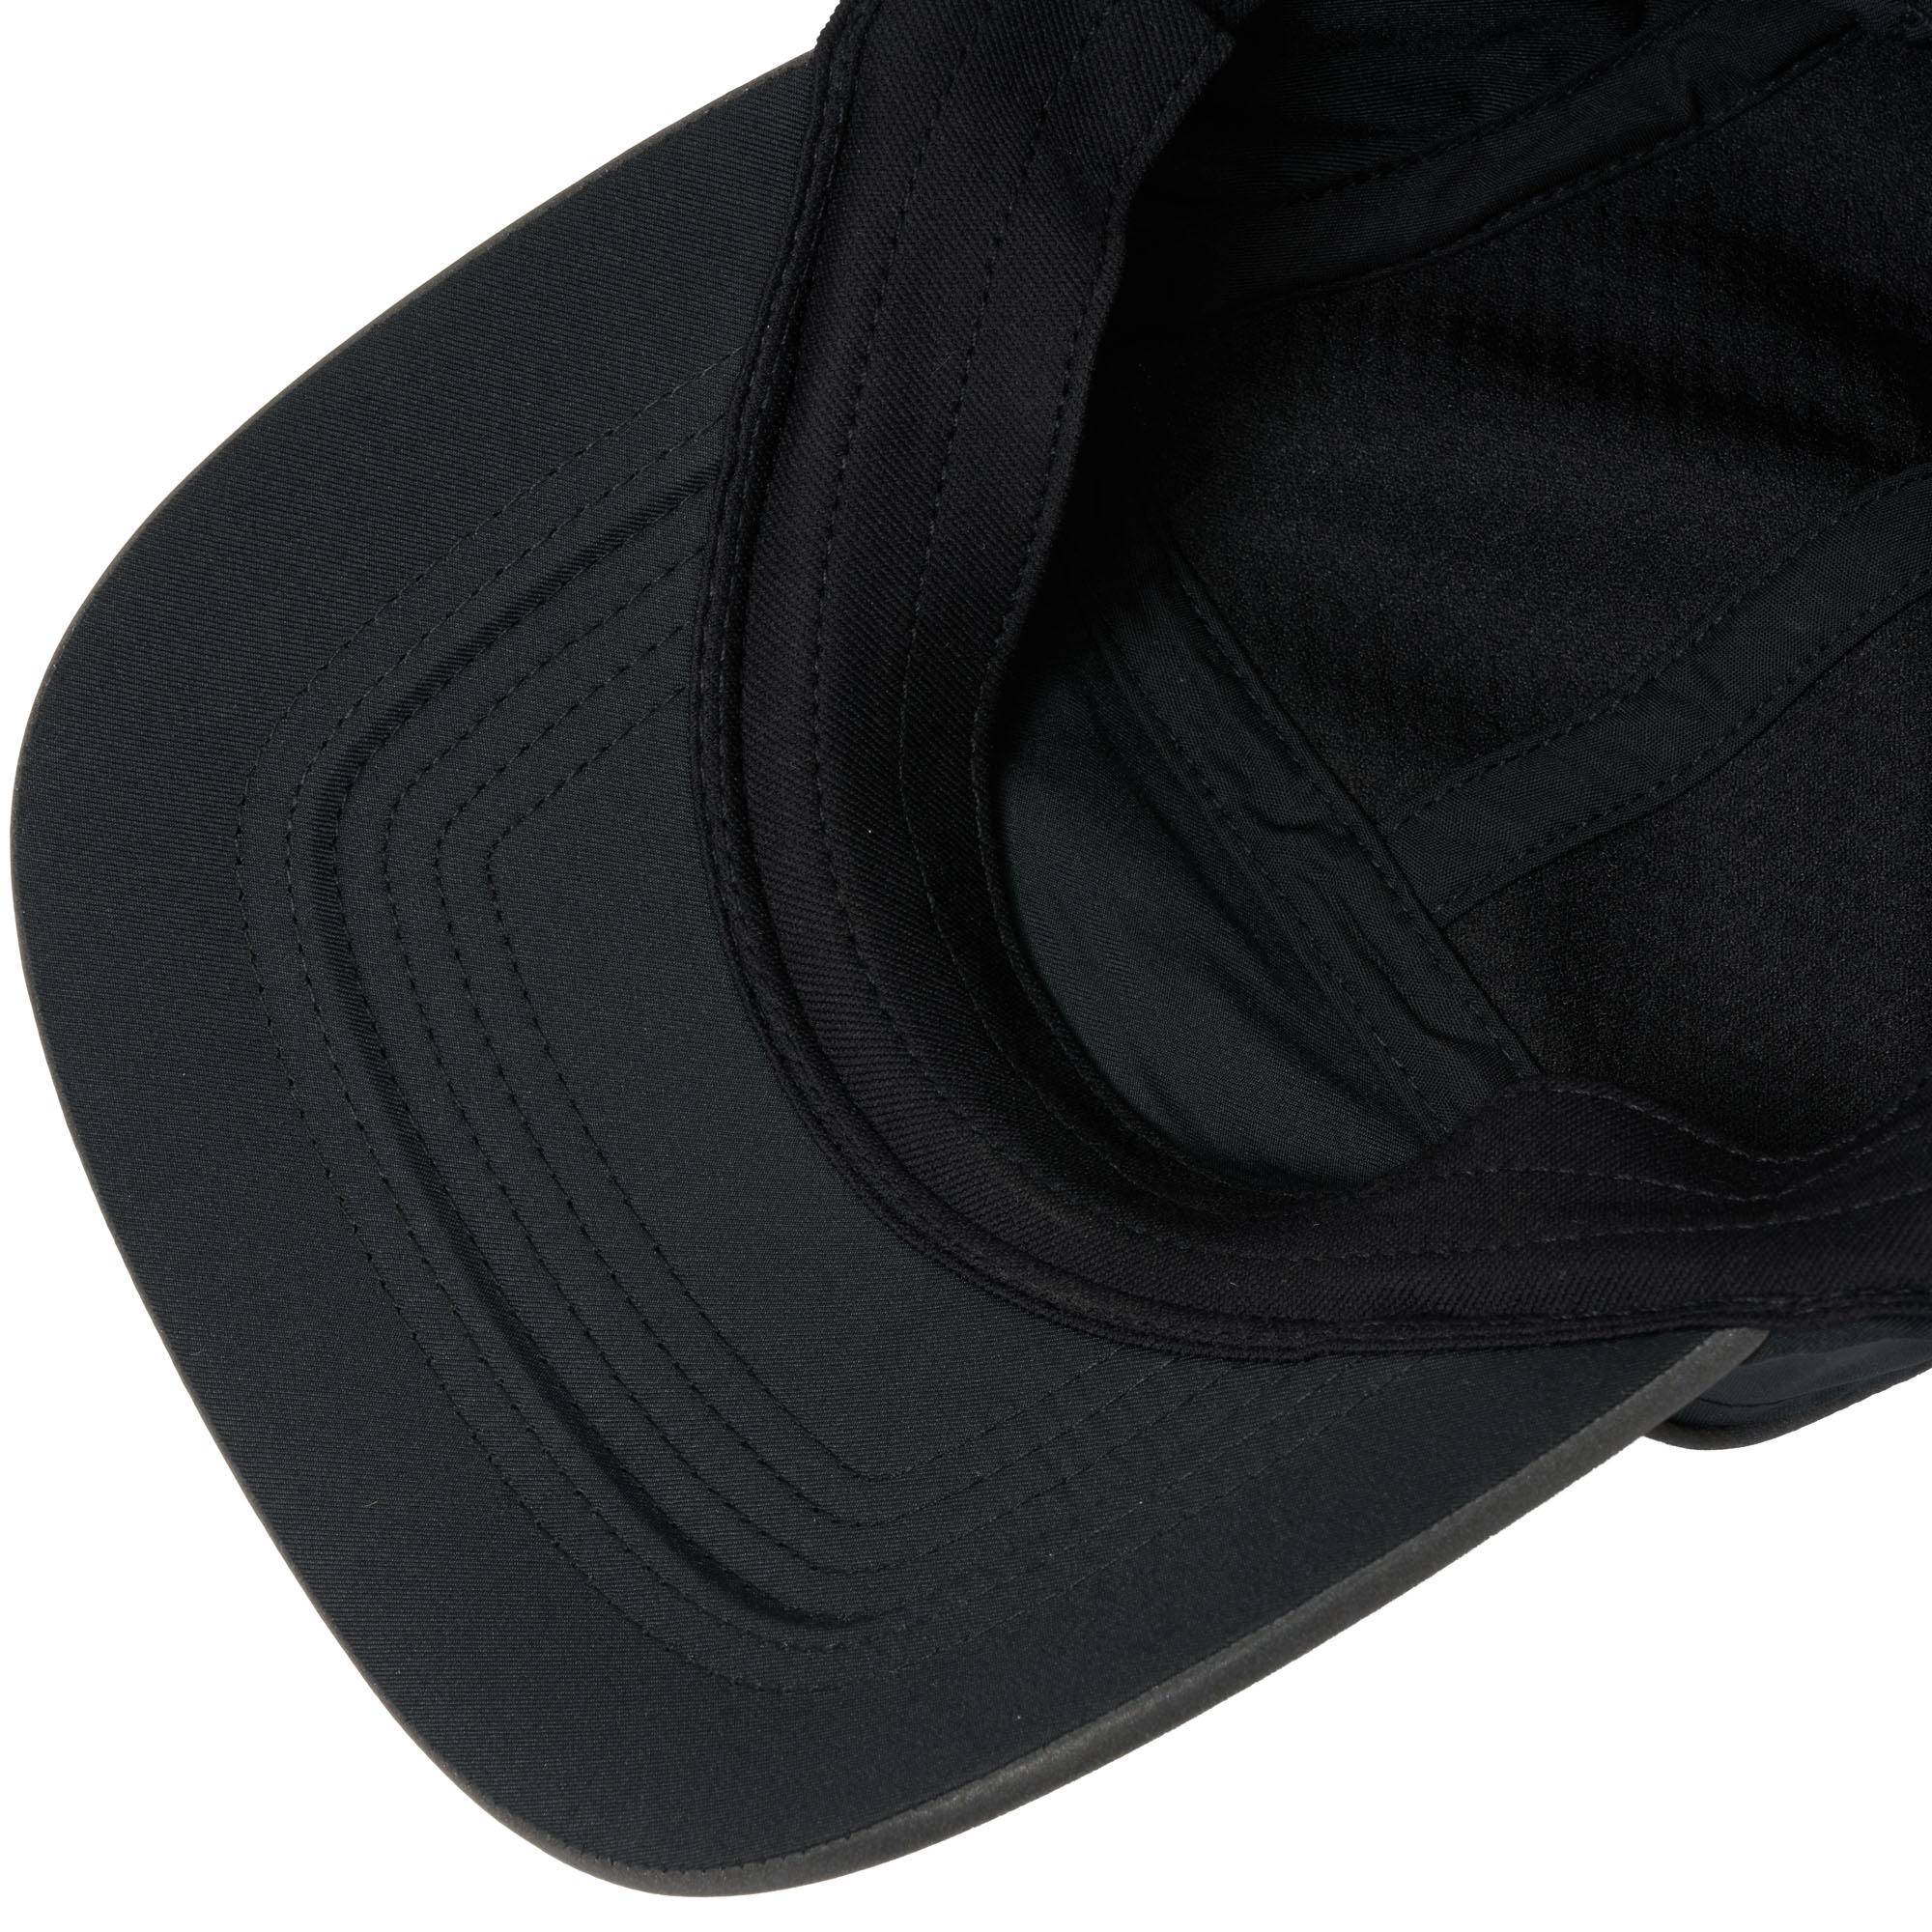 Nike Tn Air Aerobill Aw84 Cap - Black for Men - Lyst